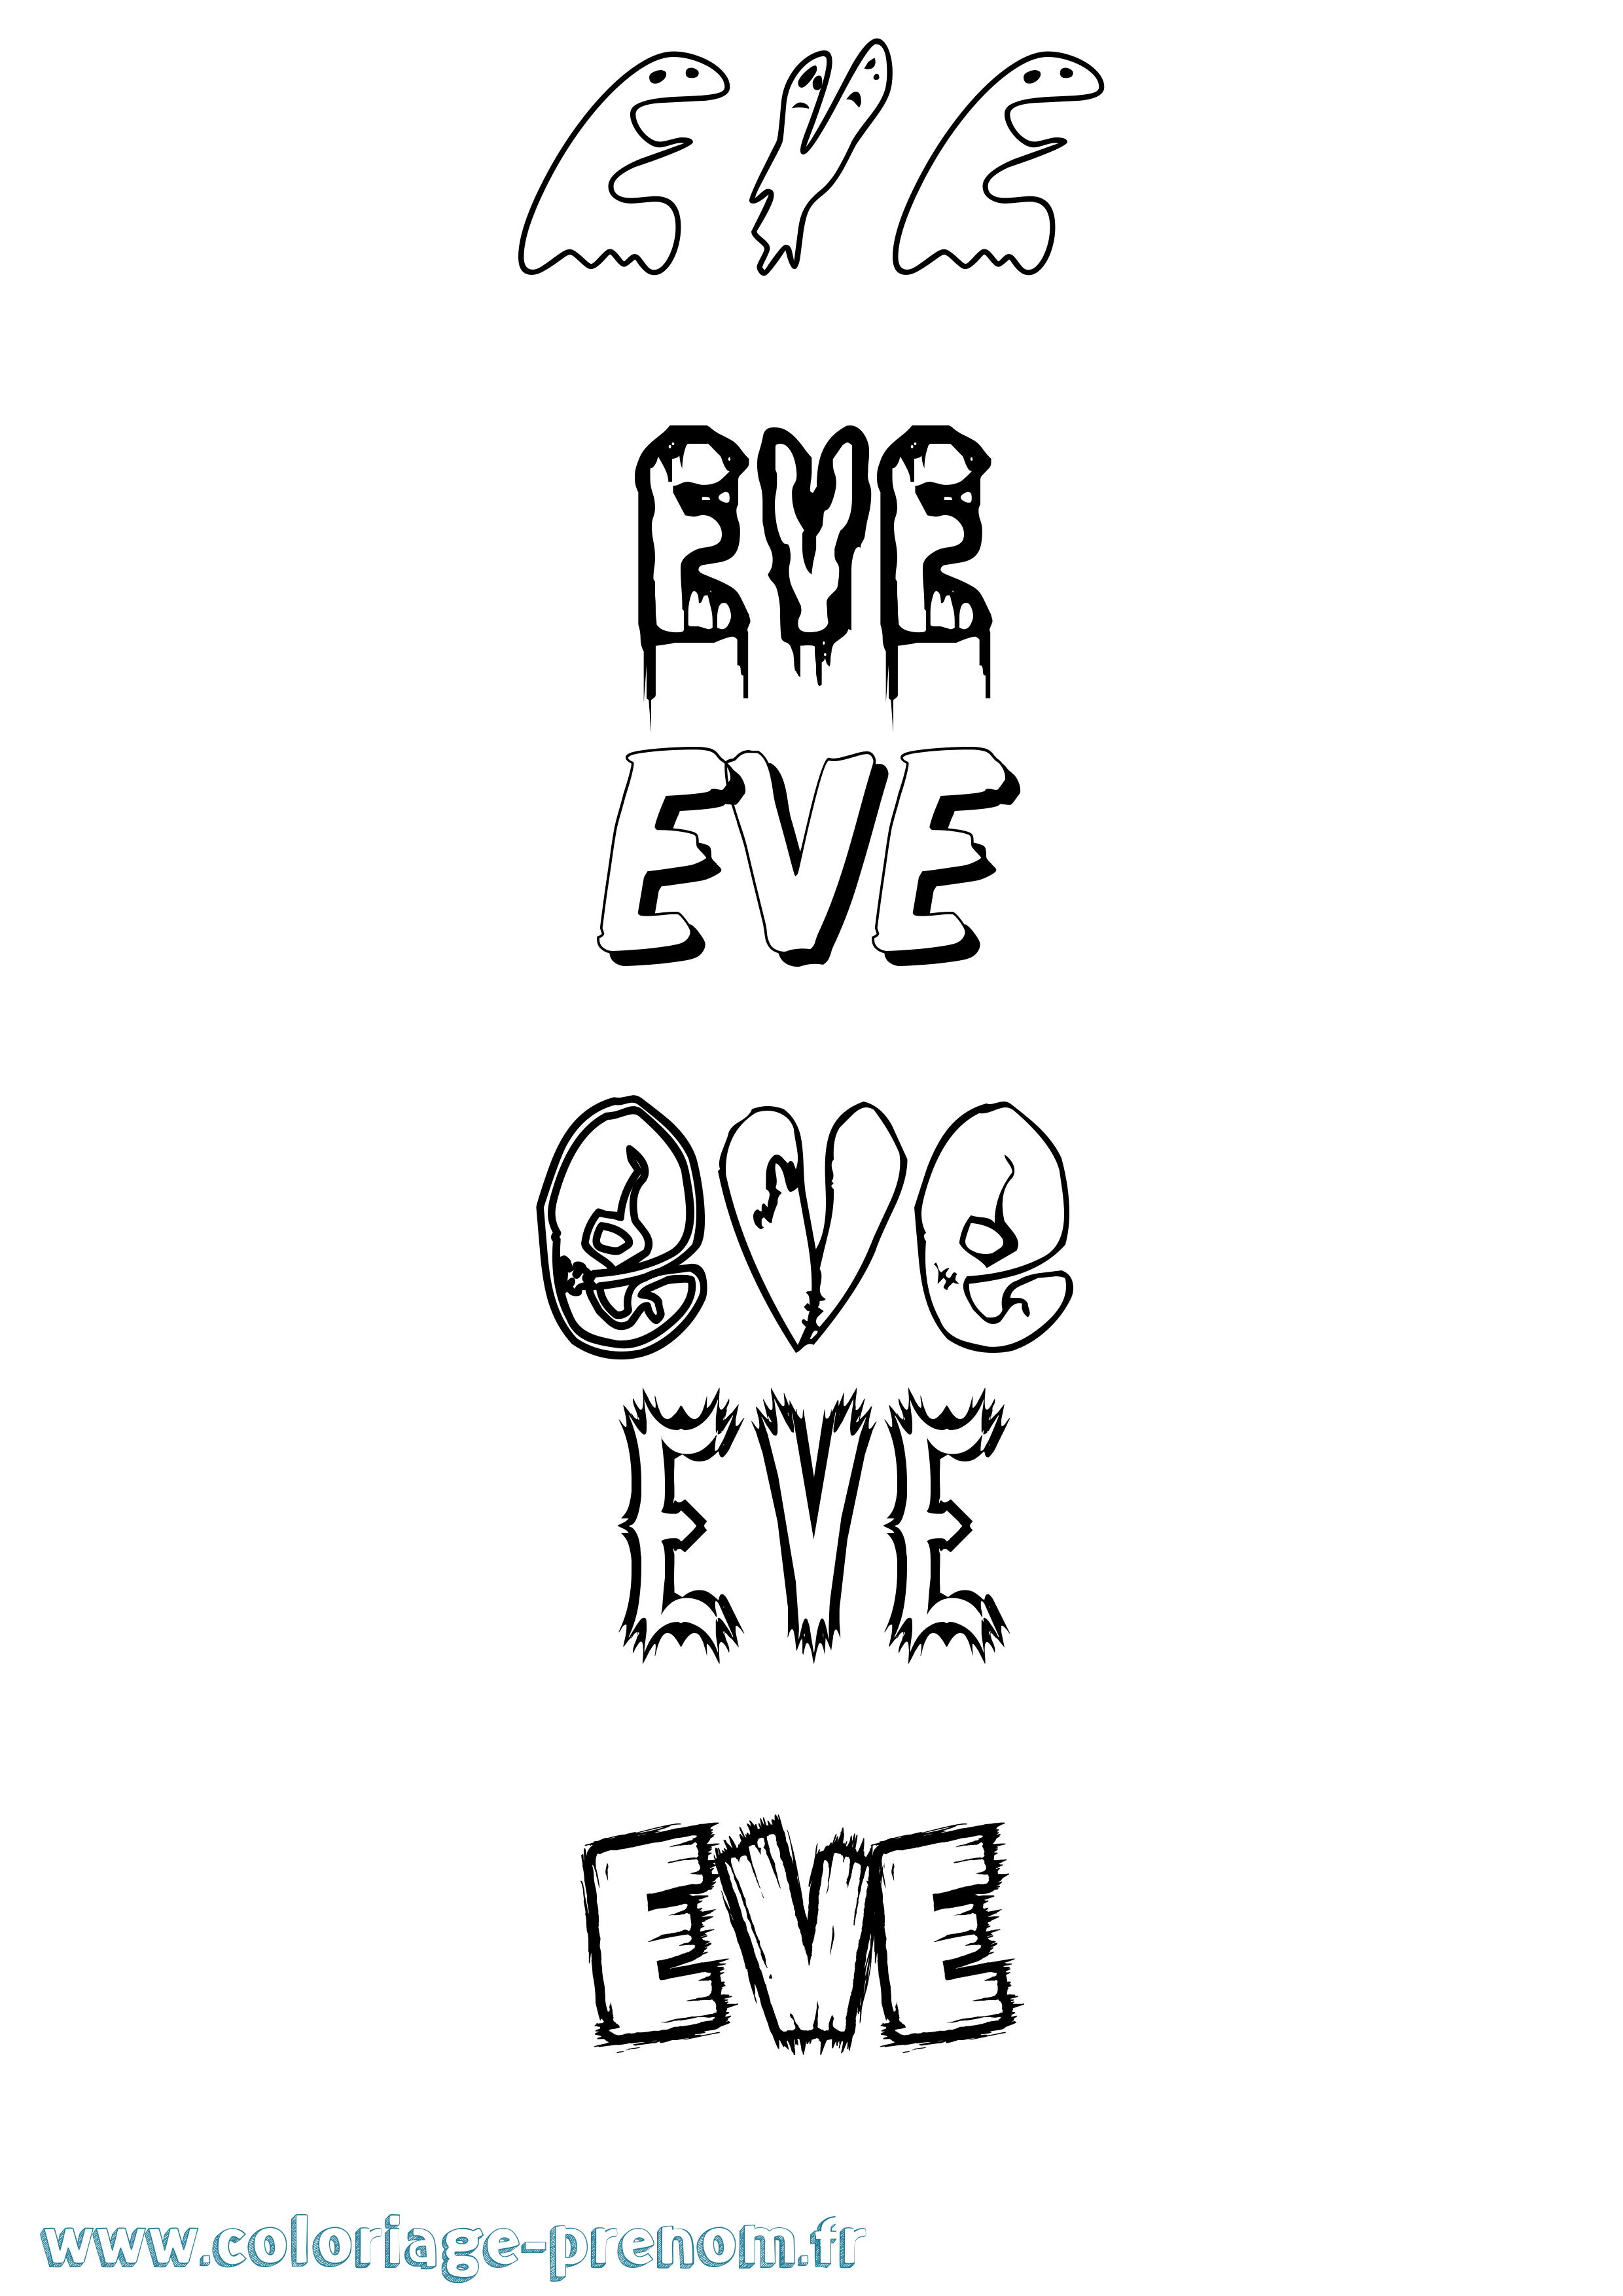 Coloriage prénom Eve